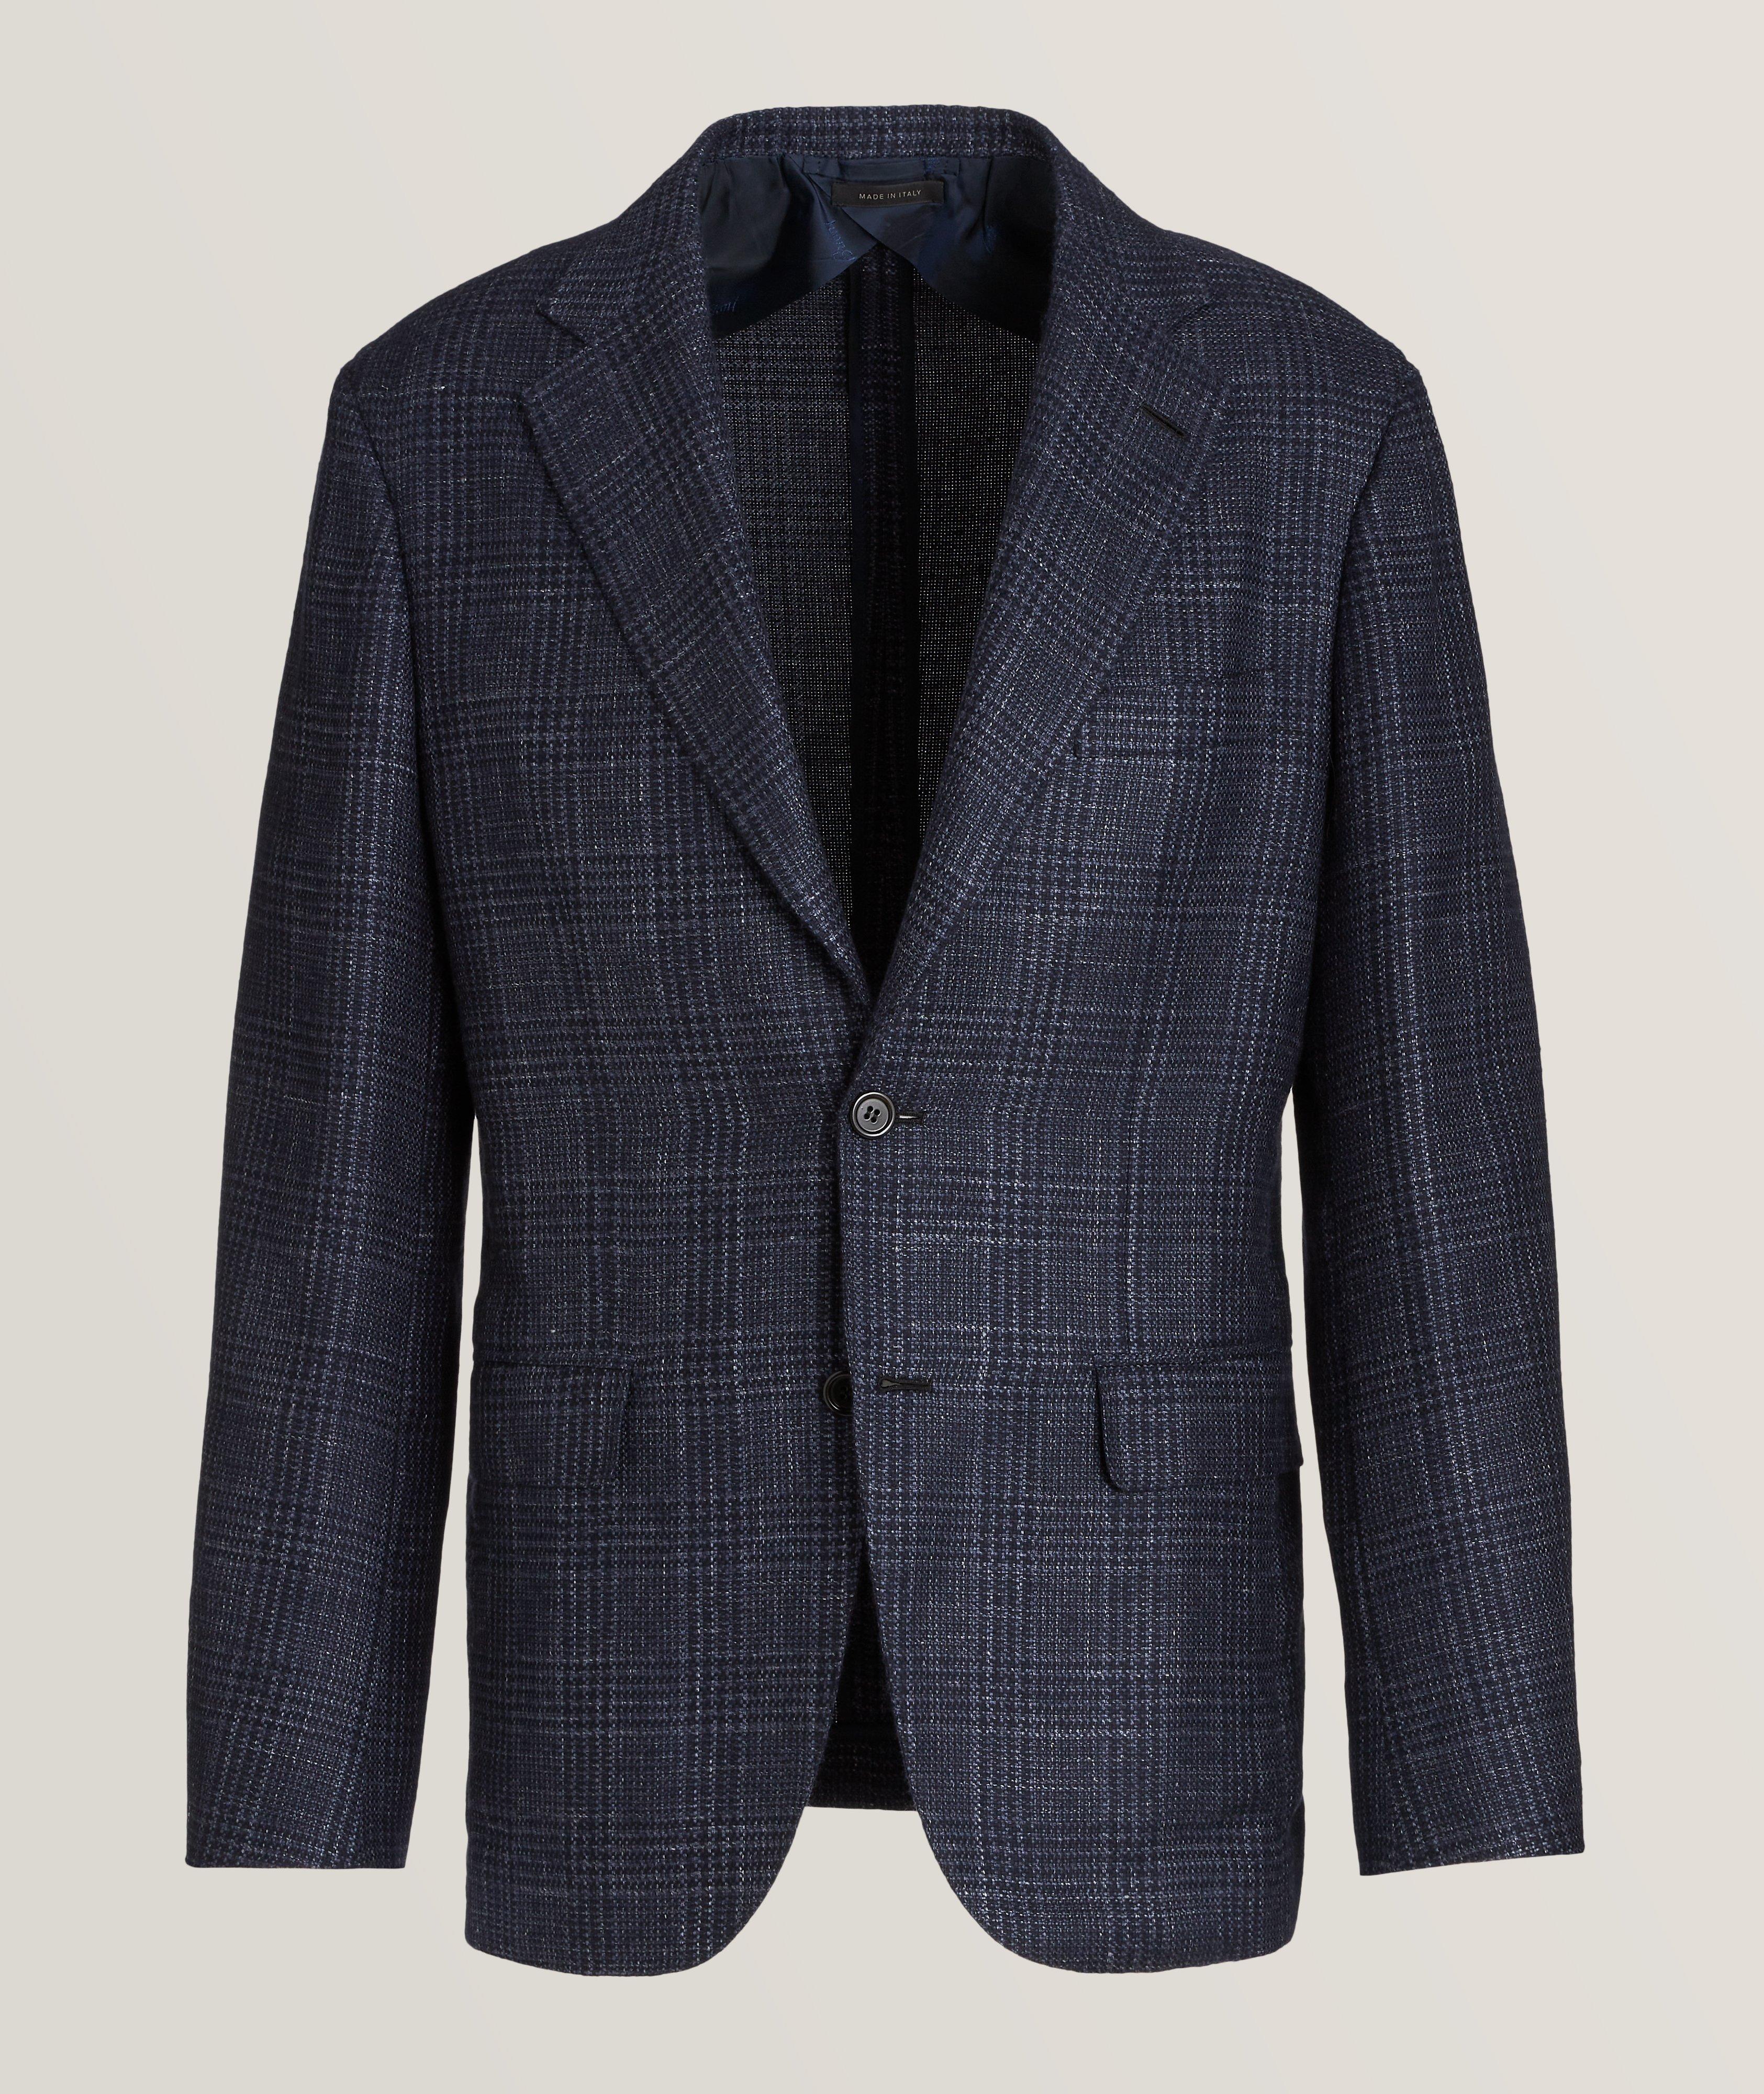 New Plume Cashmere, Silk & Linen Sport Jacket image 0